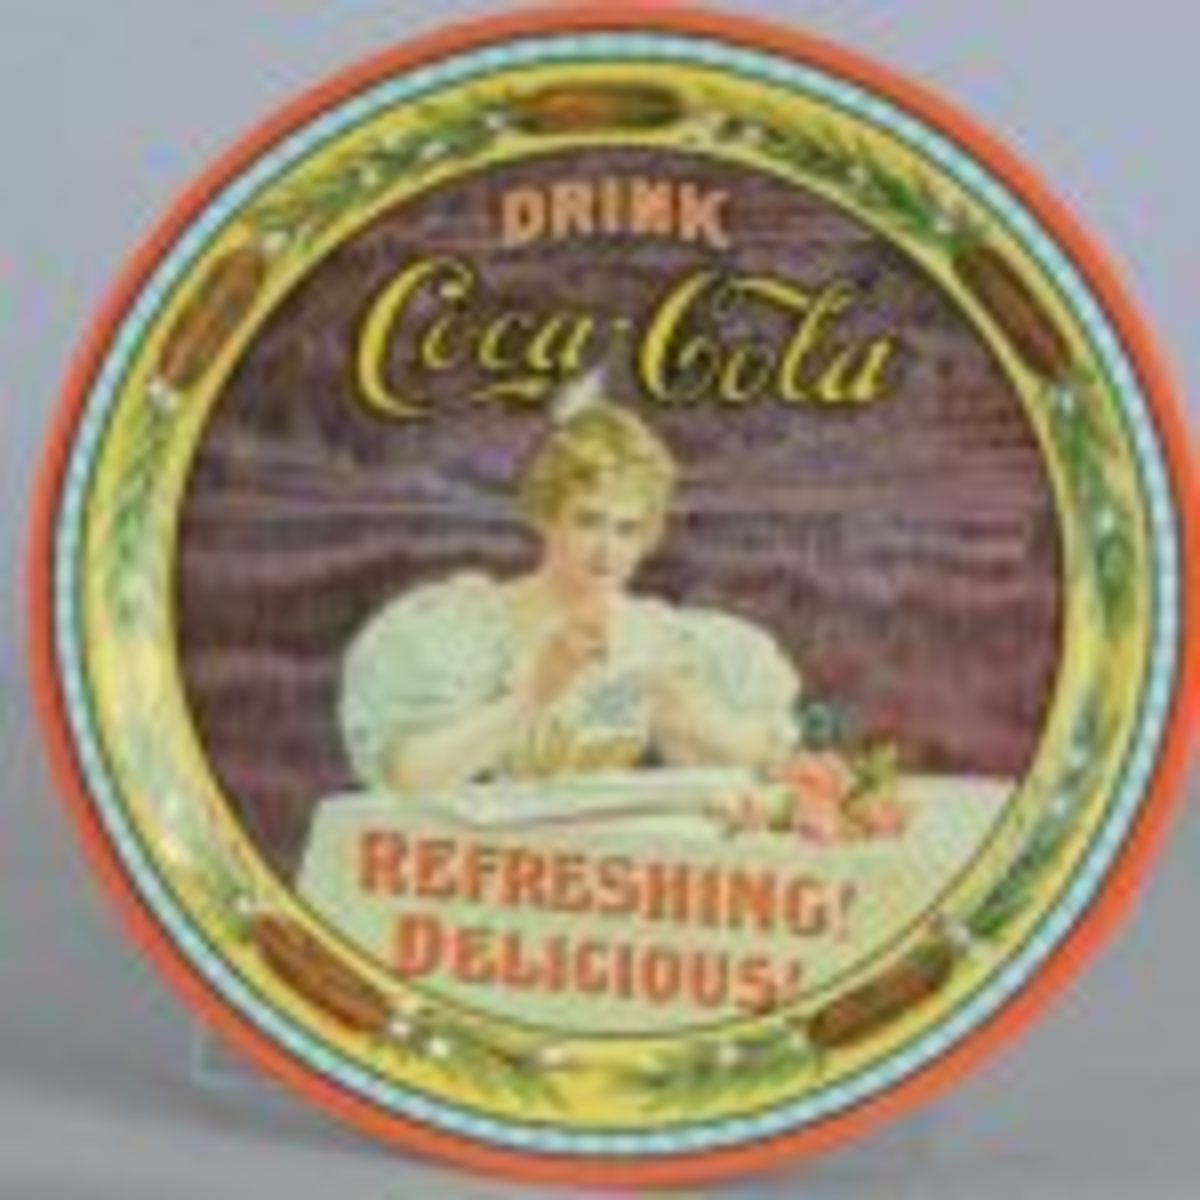 Vintage 1975 Coca-Cola Advertising Calendar Mint